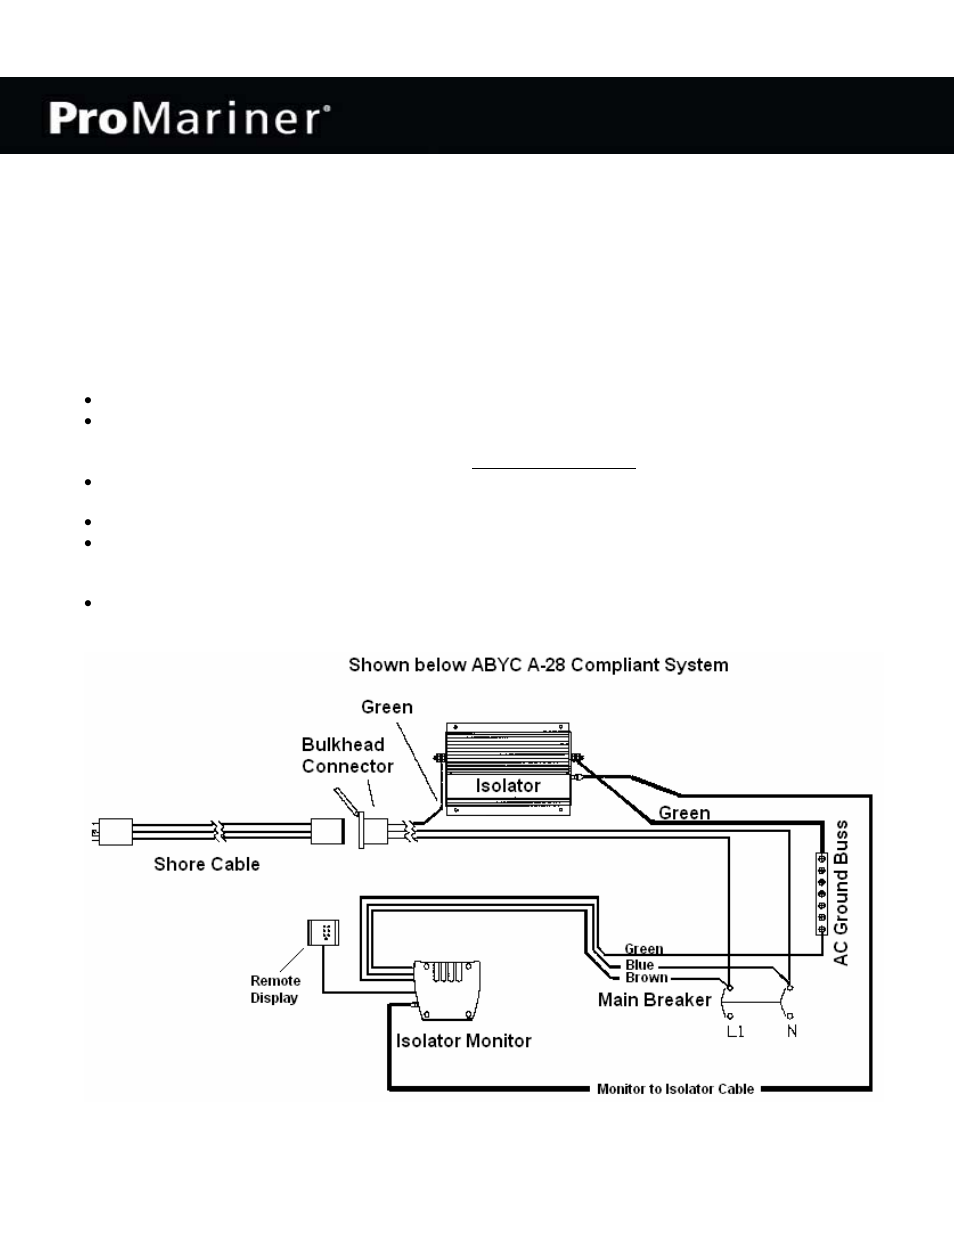 ProMariner ProSafe Galvanic Isolator User Manual | 1 page